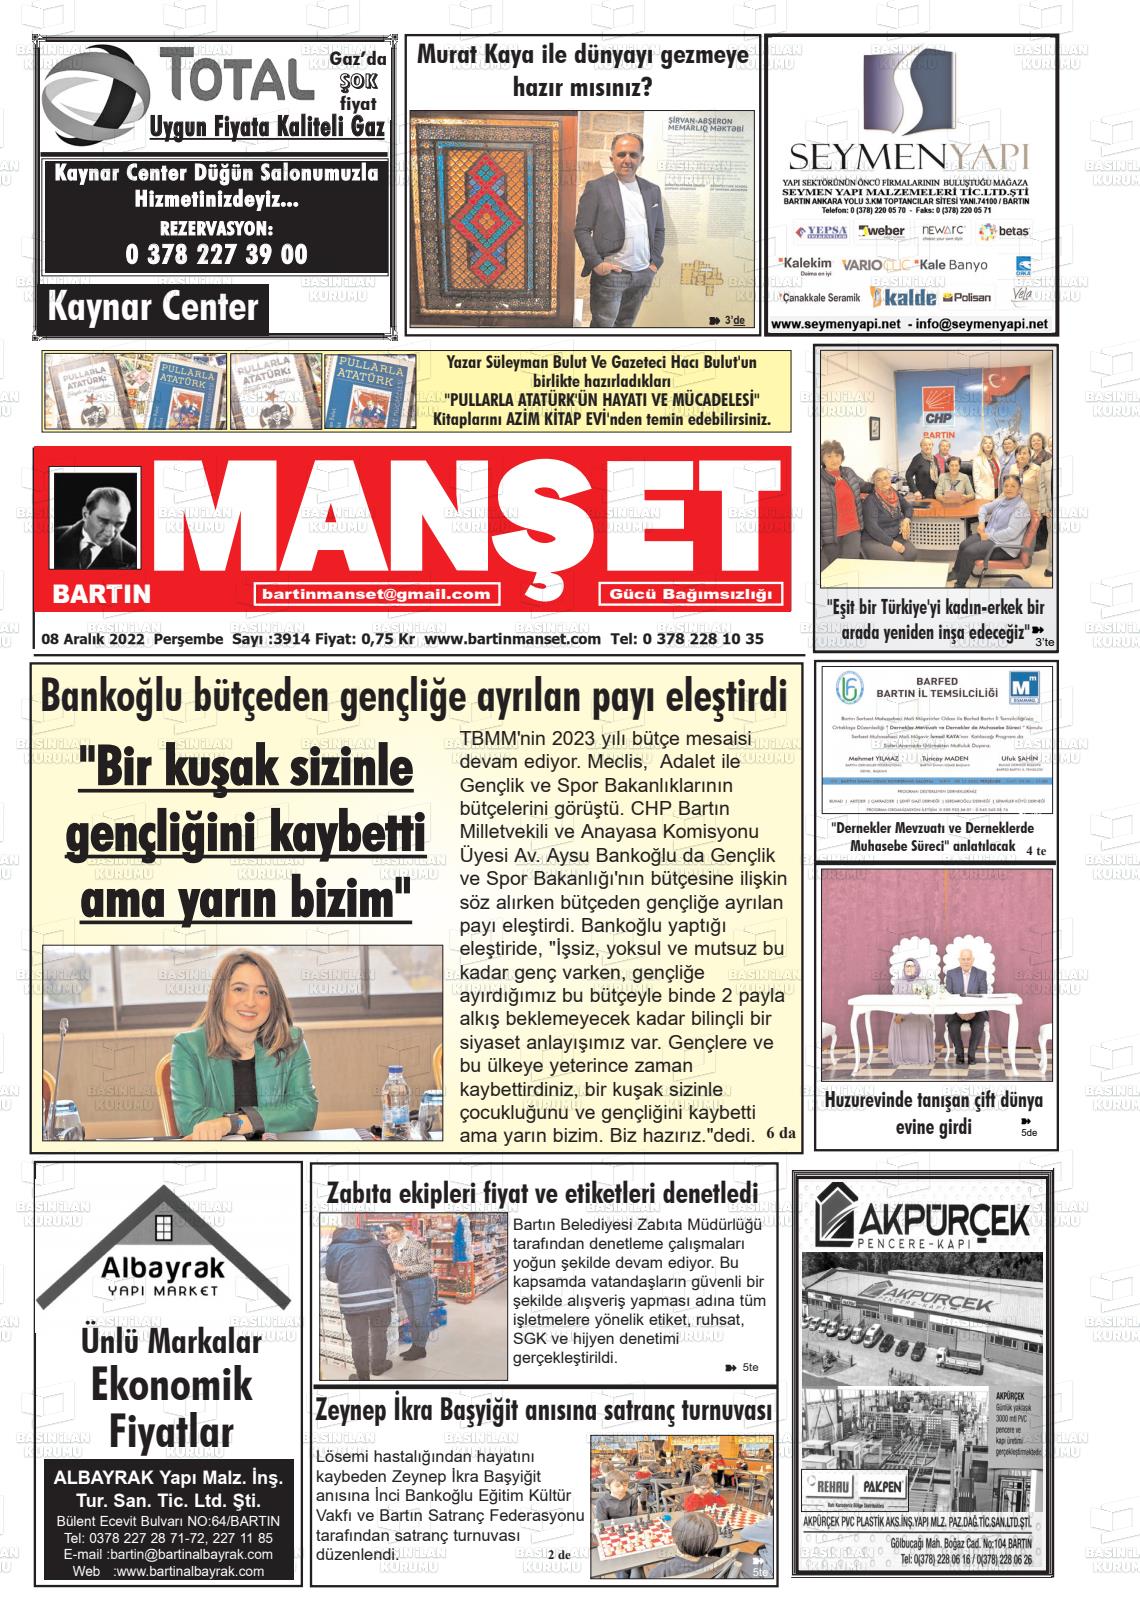 08 Aralık 2022 Bartın Manşet Gazete Manşeti